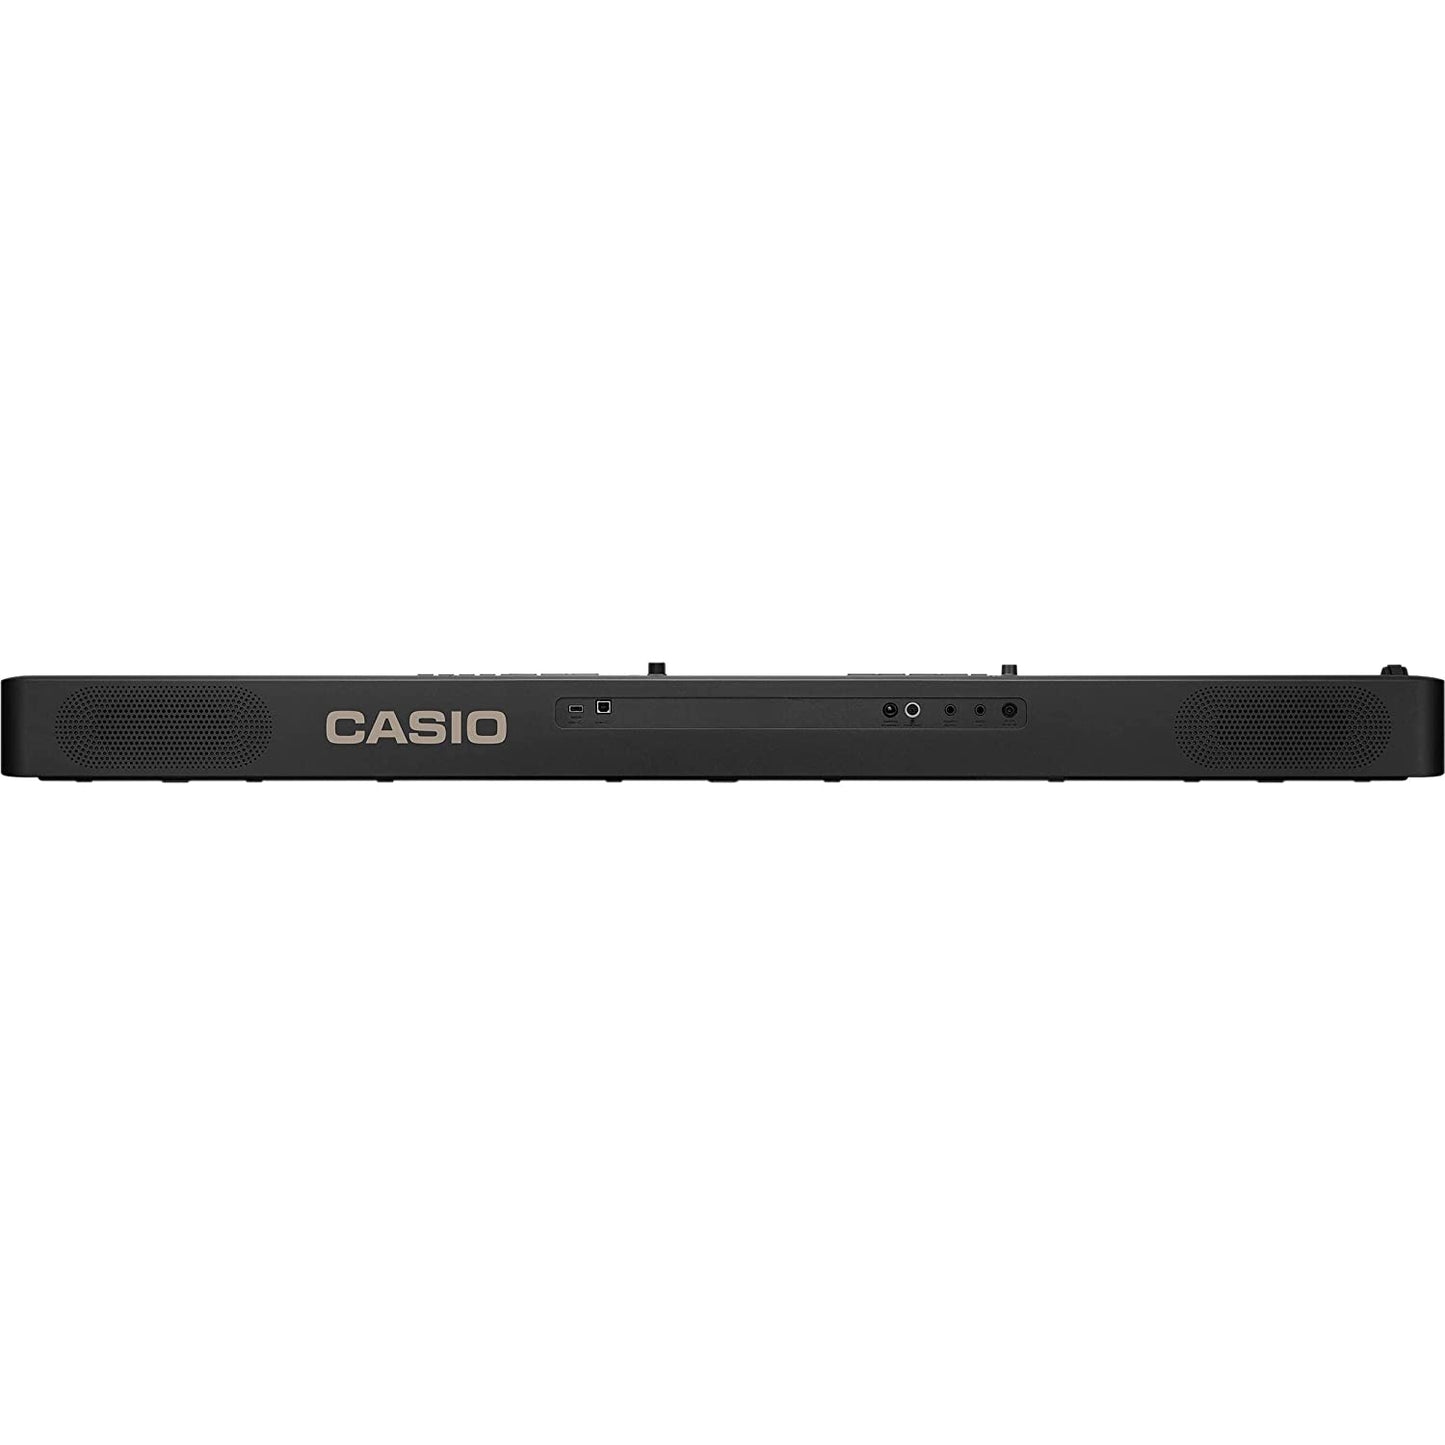 Casio CDP-S360 88-Key Slim-Body Portable Digital Piano - Black